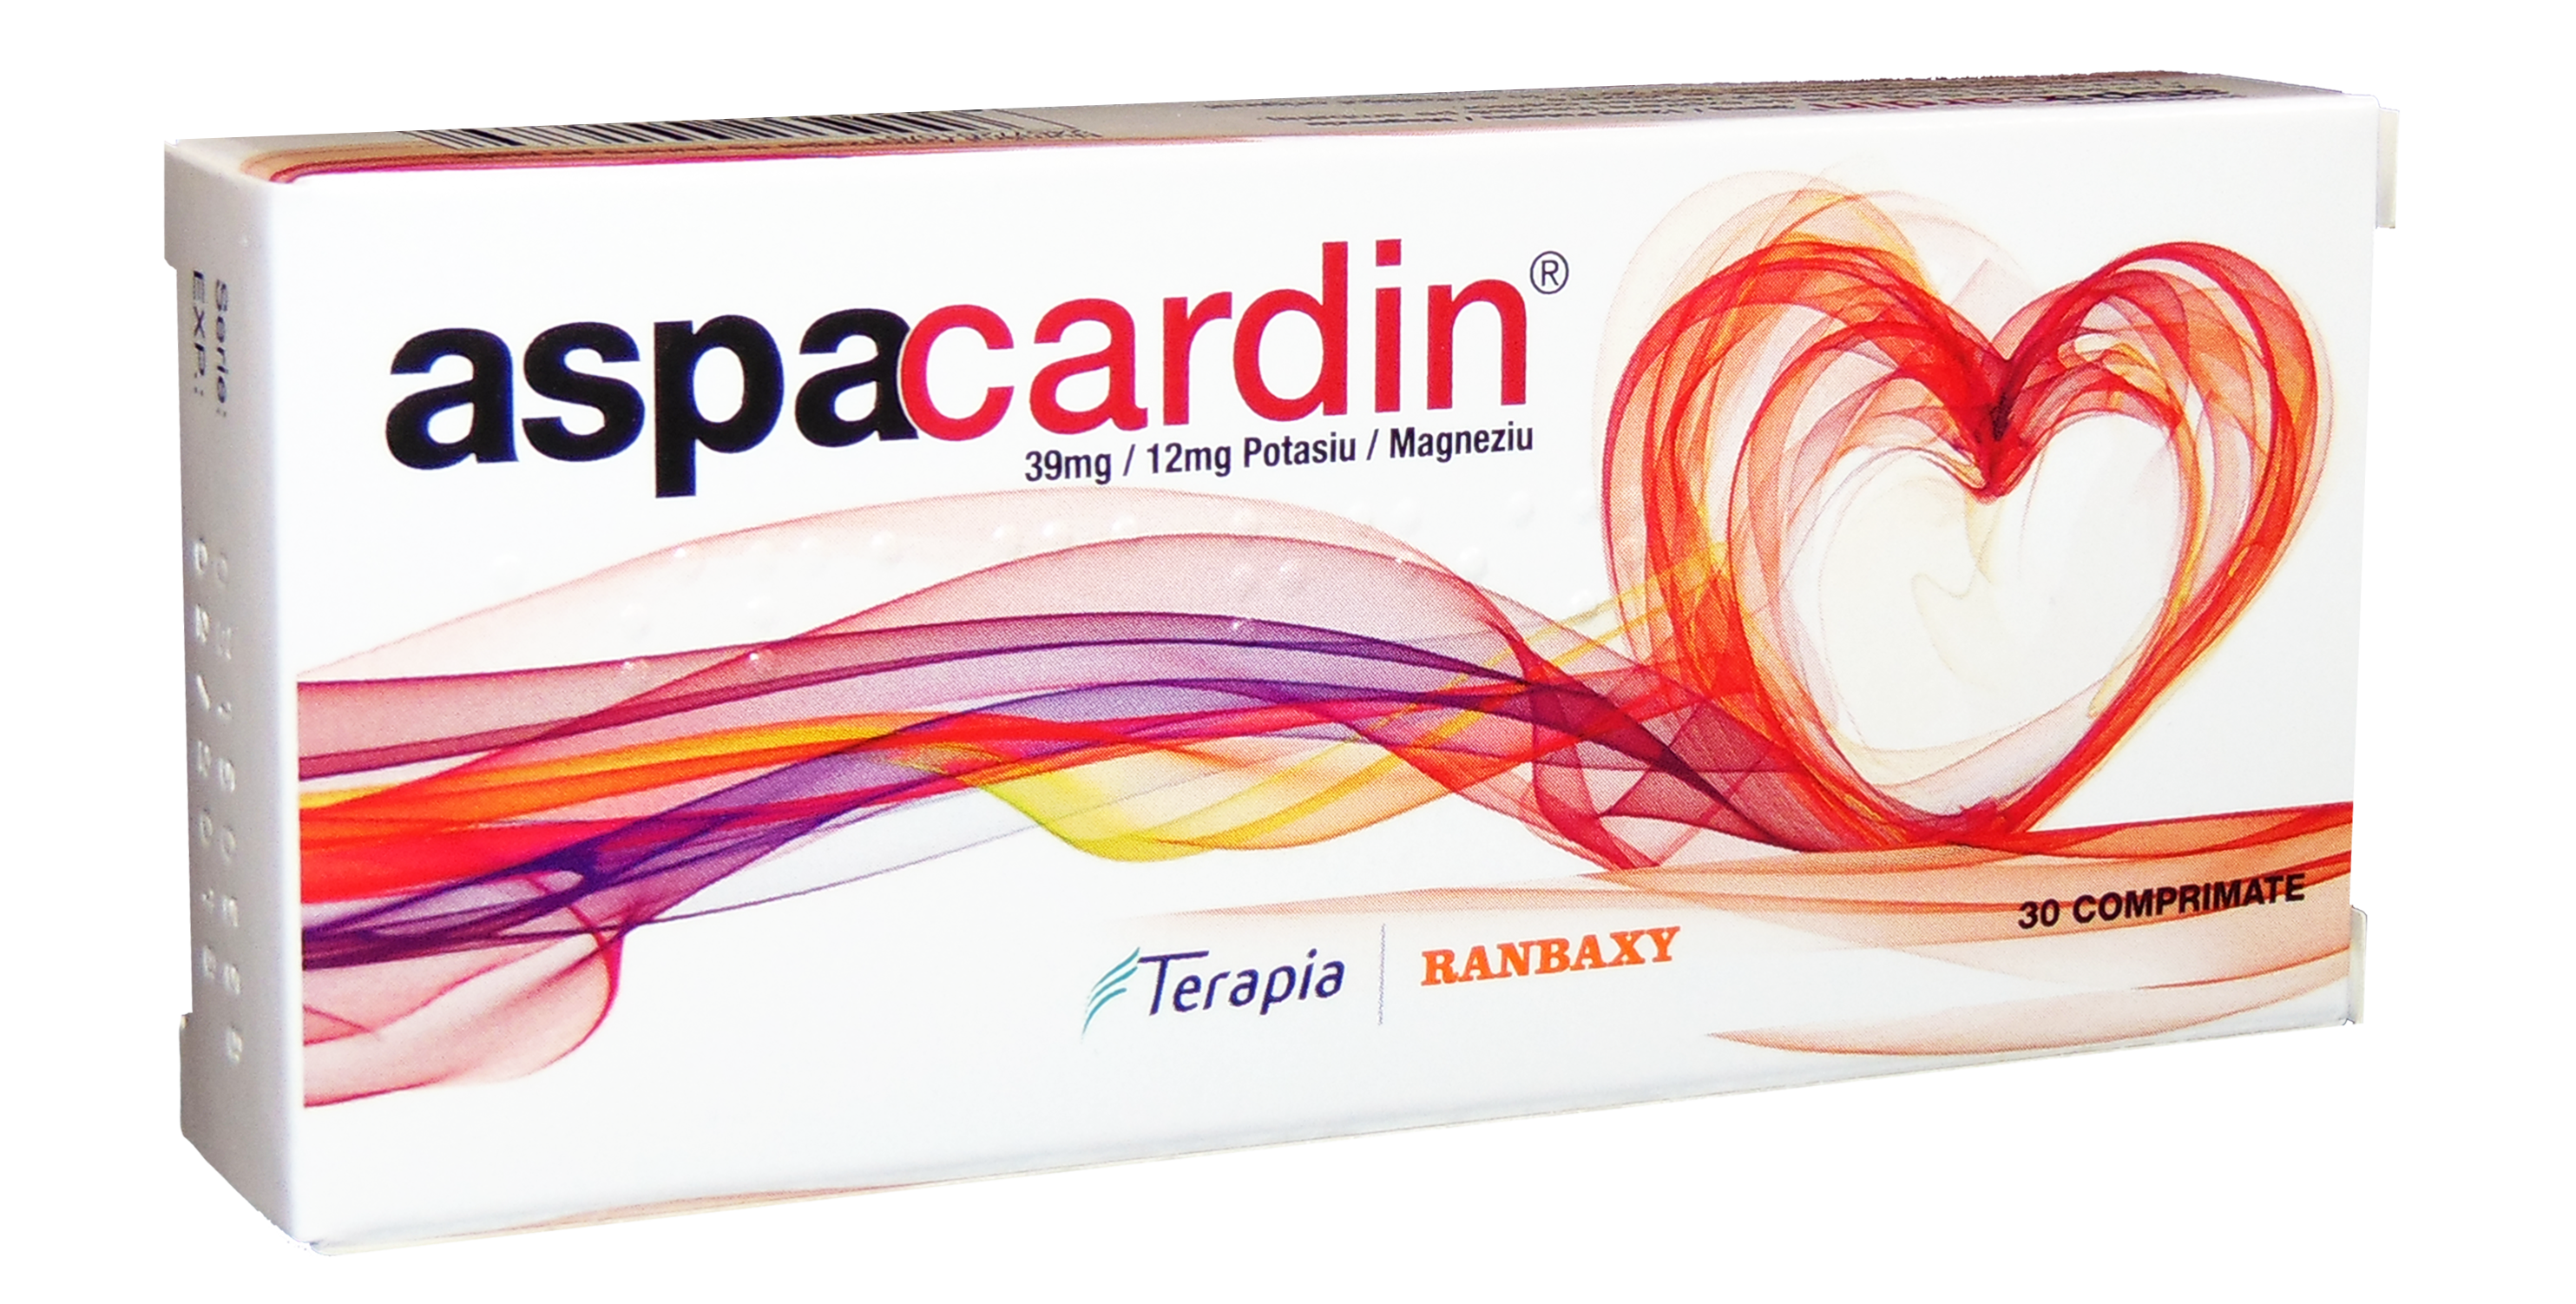 Cardiologie - Aspacardin 39mg/12mg x 30 comprimate, medik-on.ro